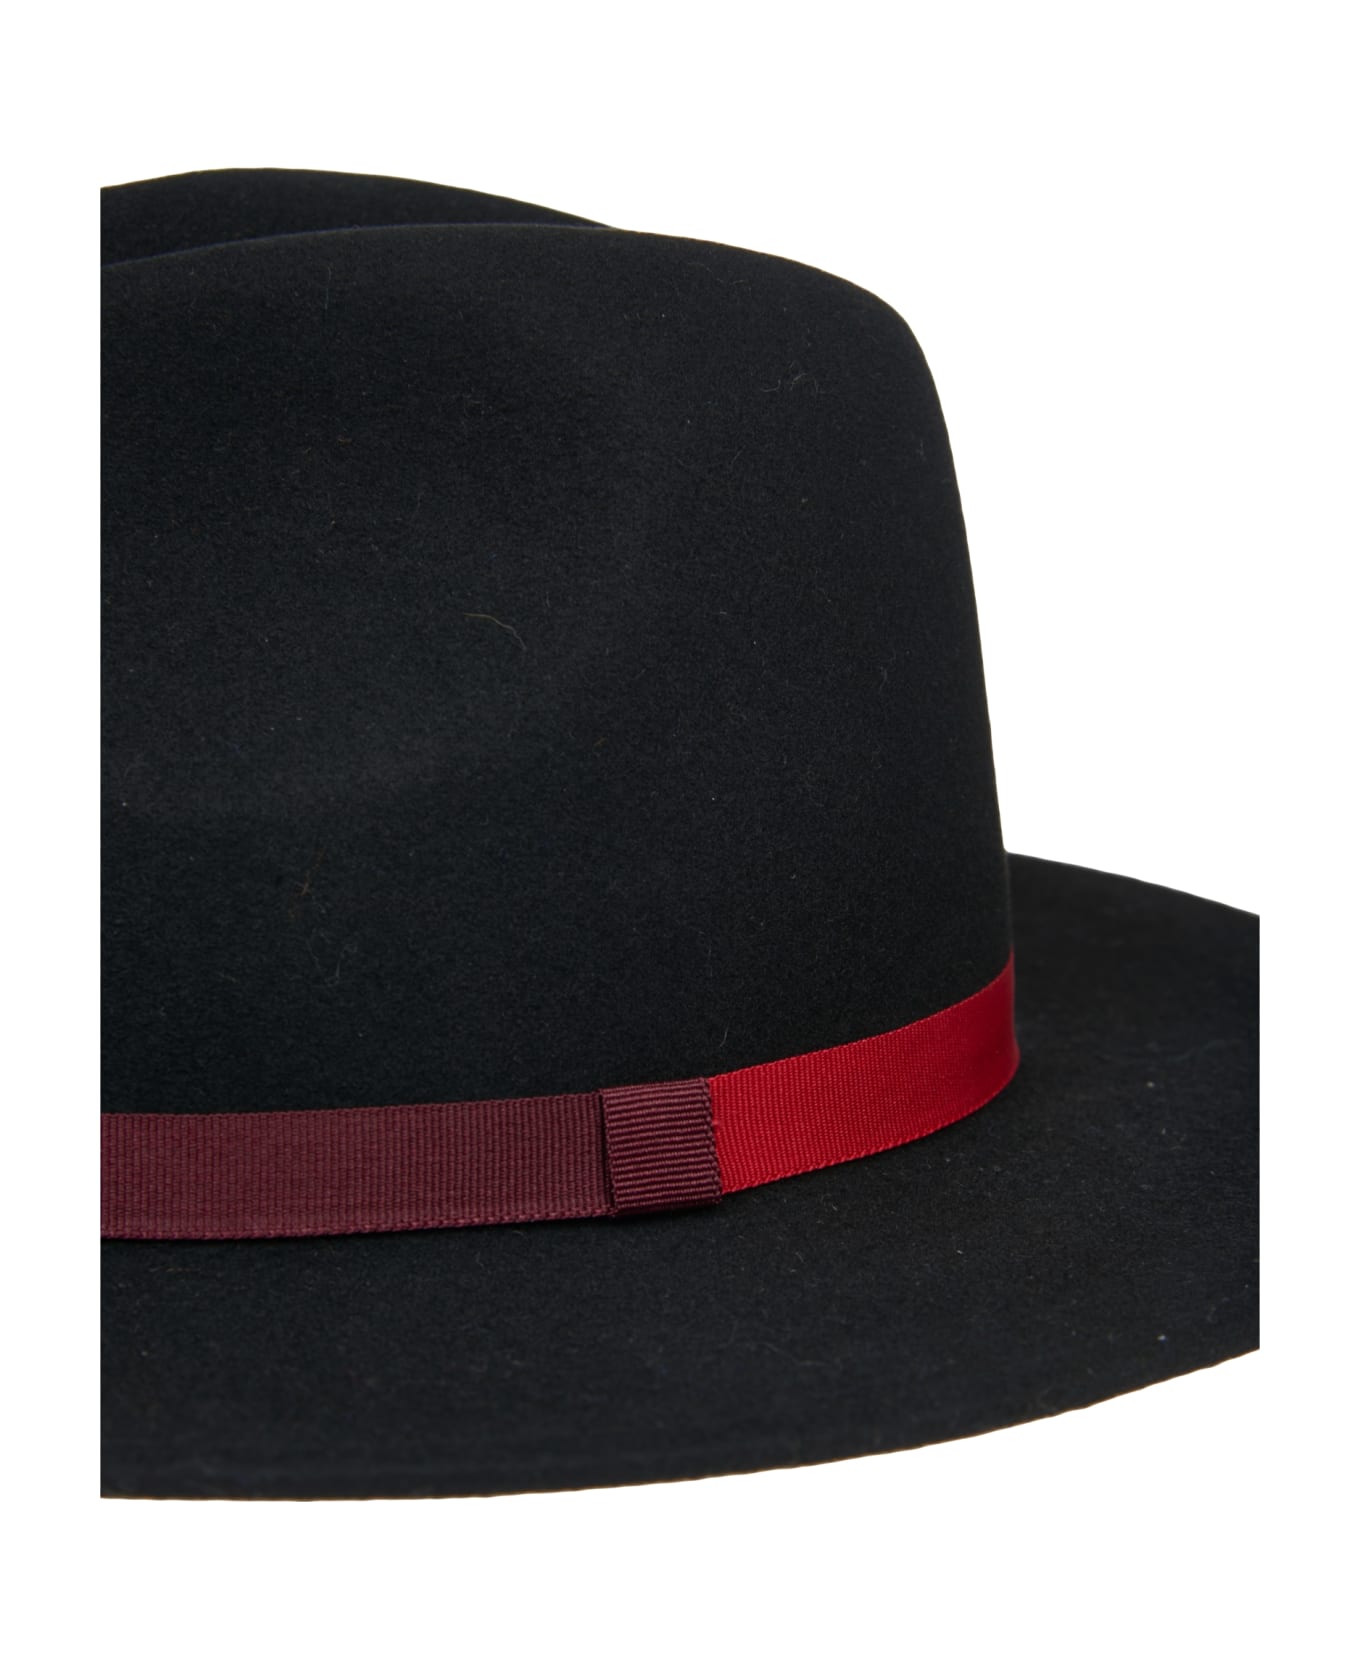 Paul Smith Hat - Black